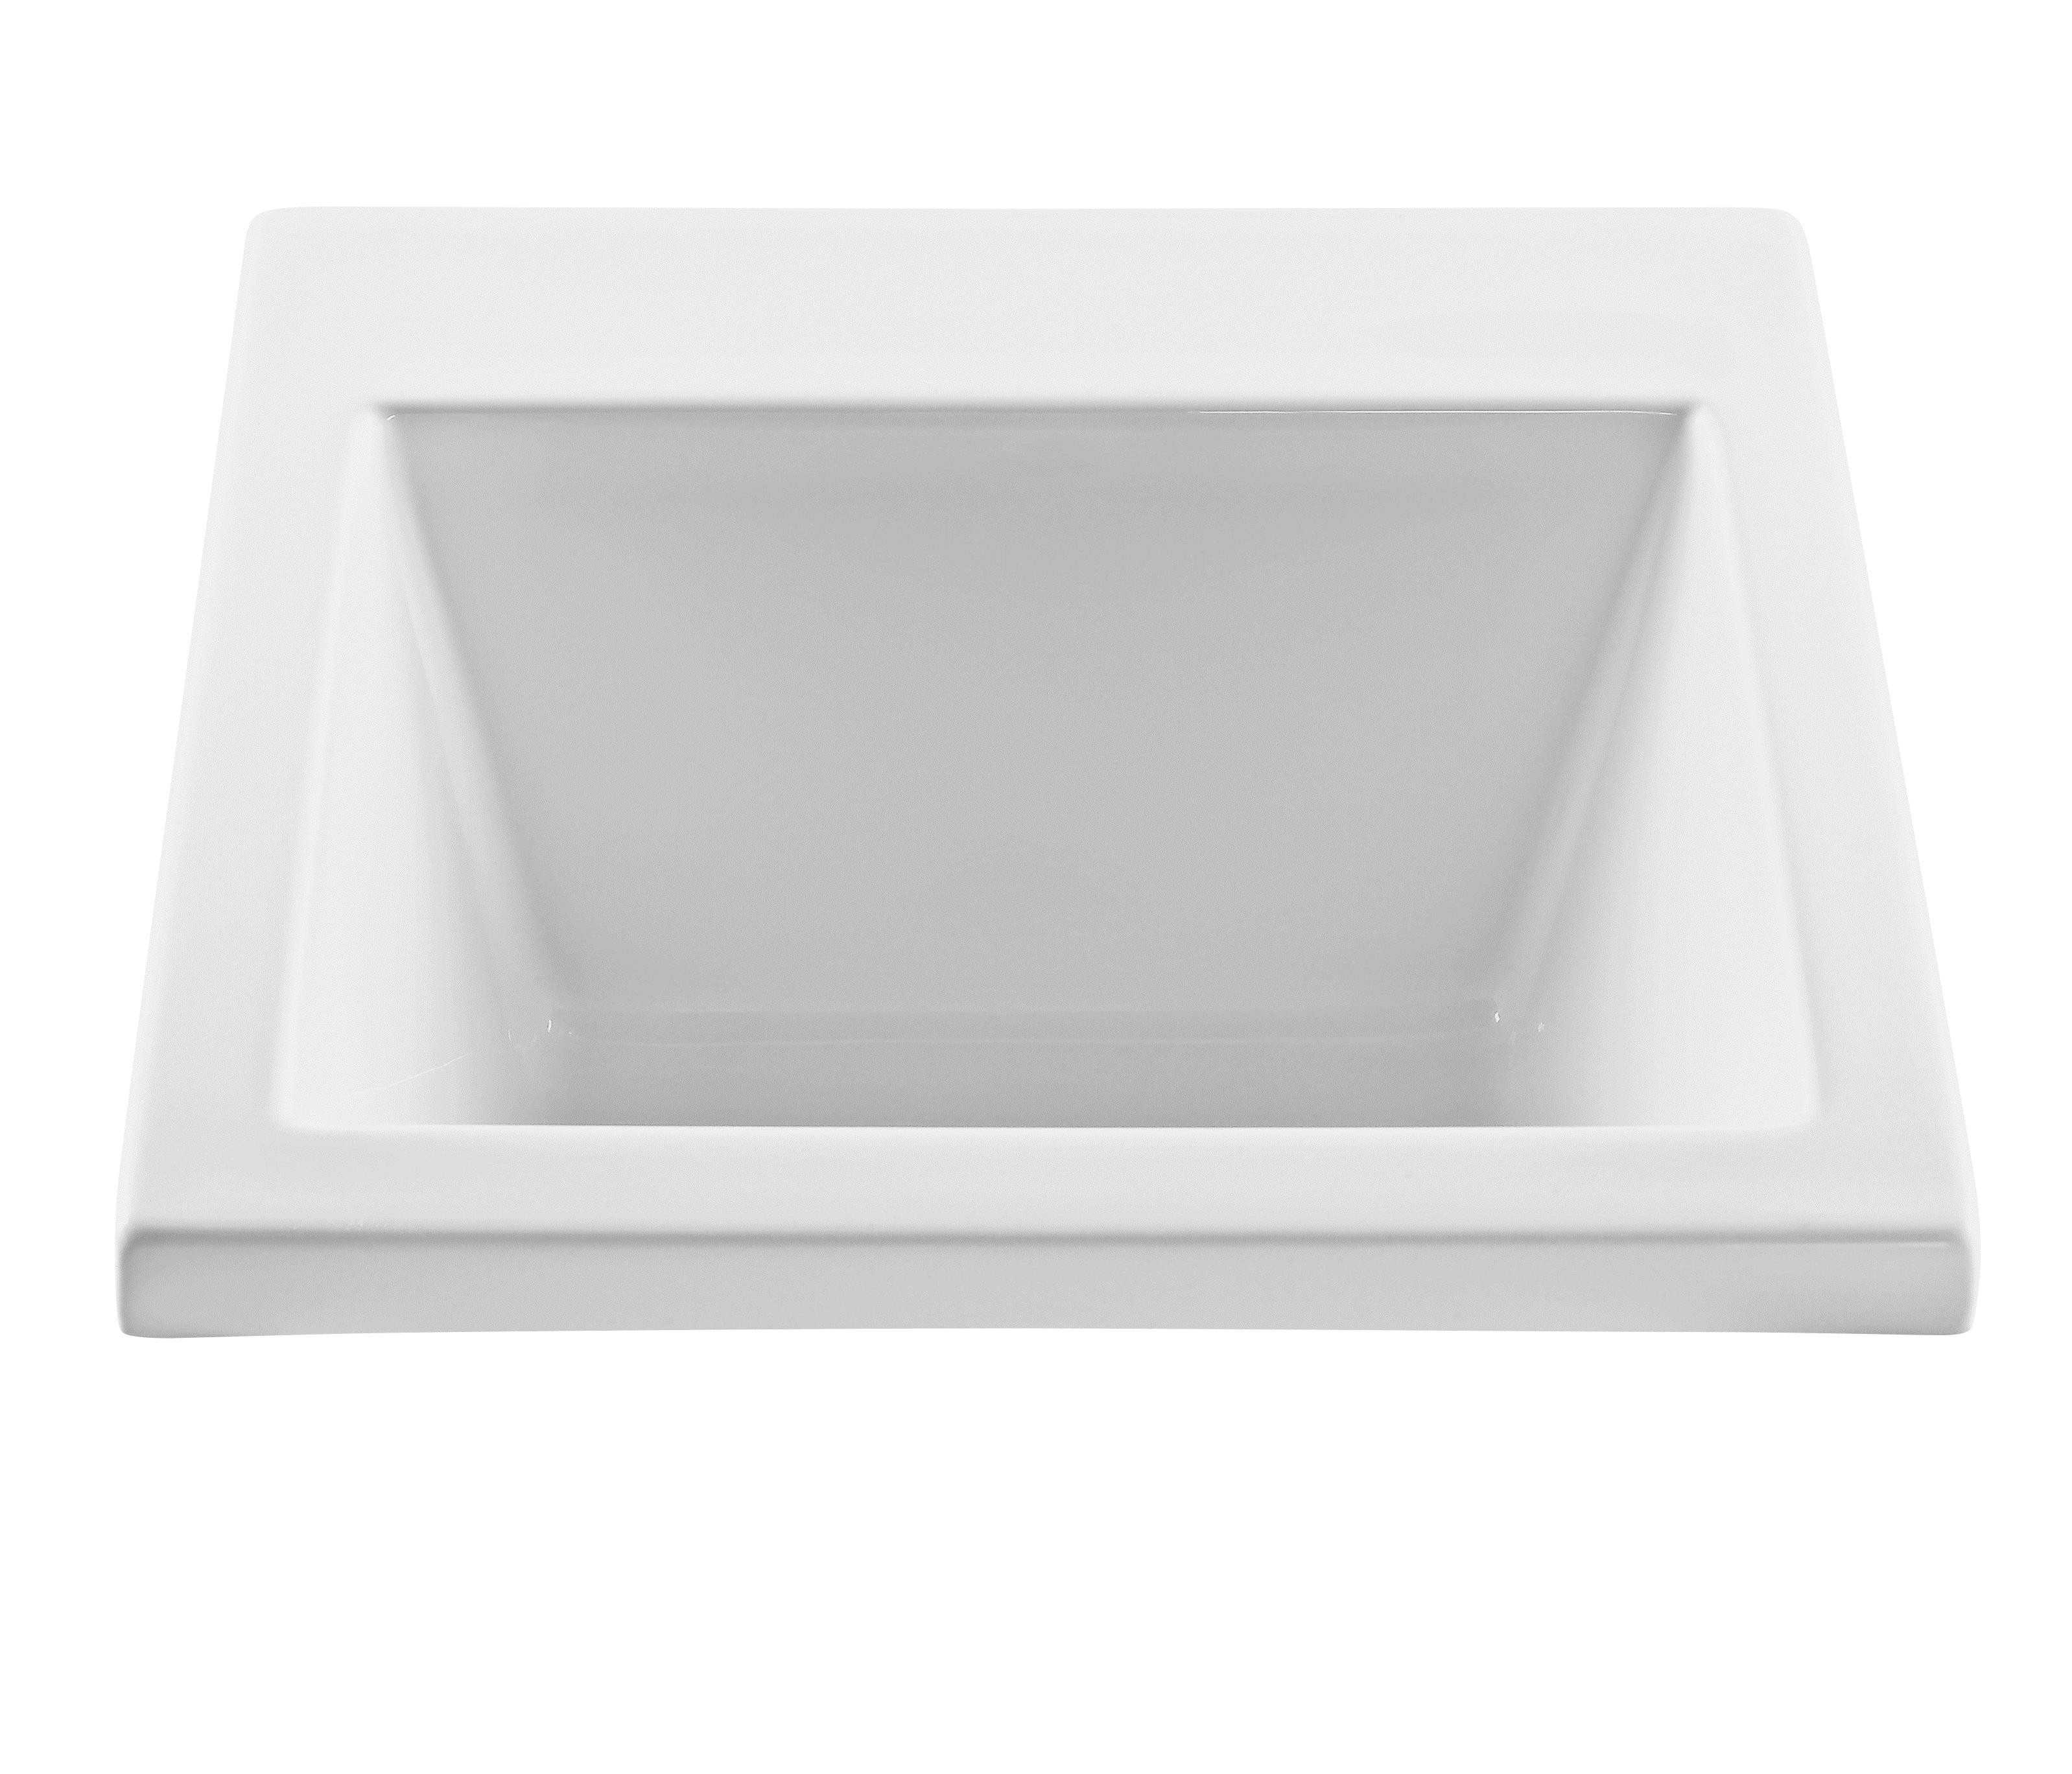 Relaince RLS120 Versatile Acrylic Drop In Single Bowl Laundry Sink